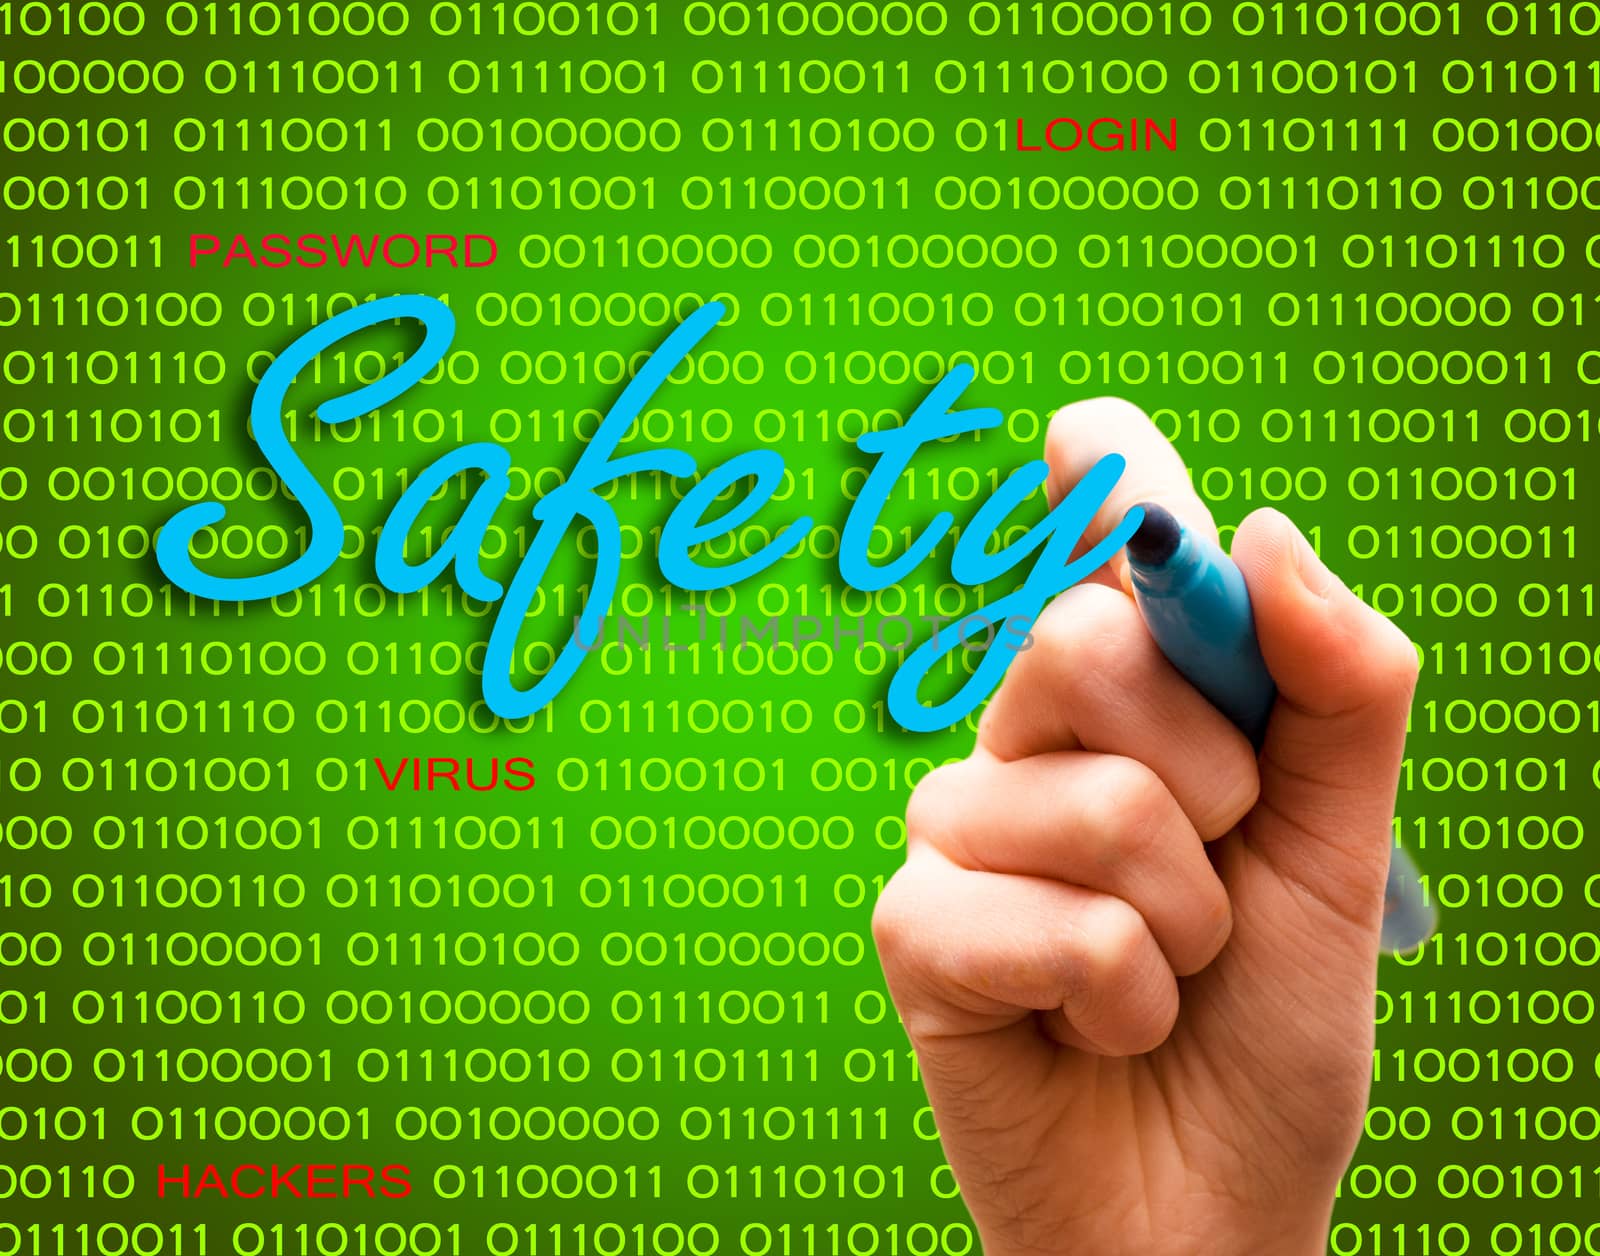 Safety password login virus hackers hand binary text